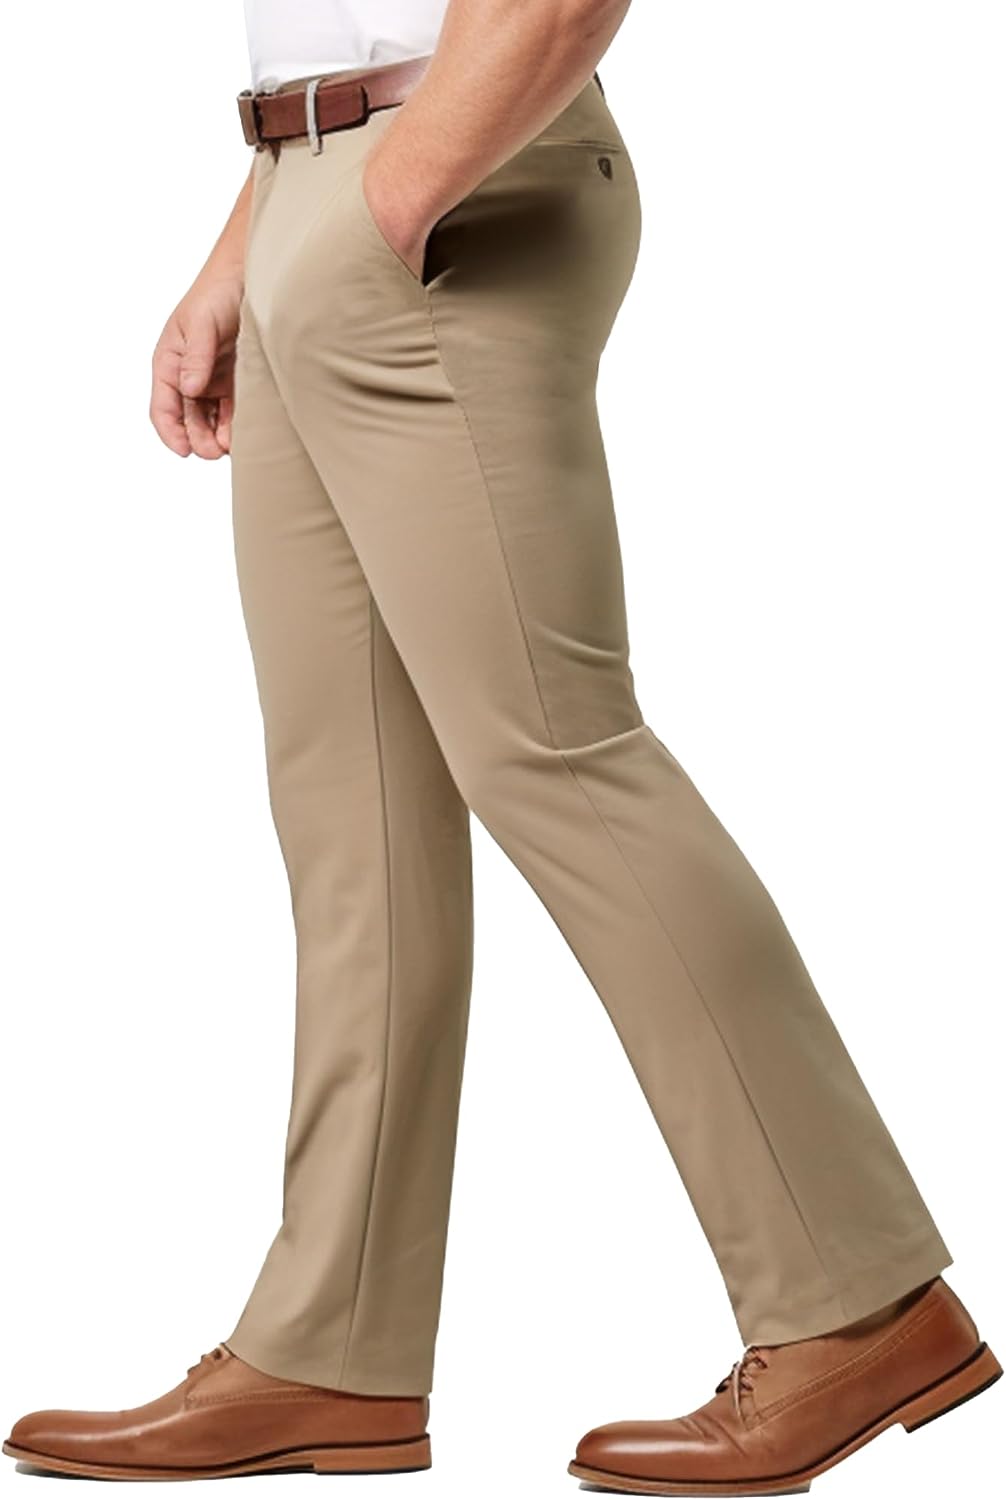 4-Way Stretch Formal Trousers in Tan Khaki- Slim Fit